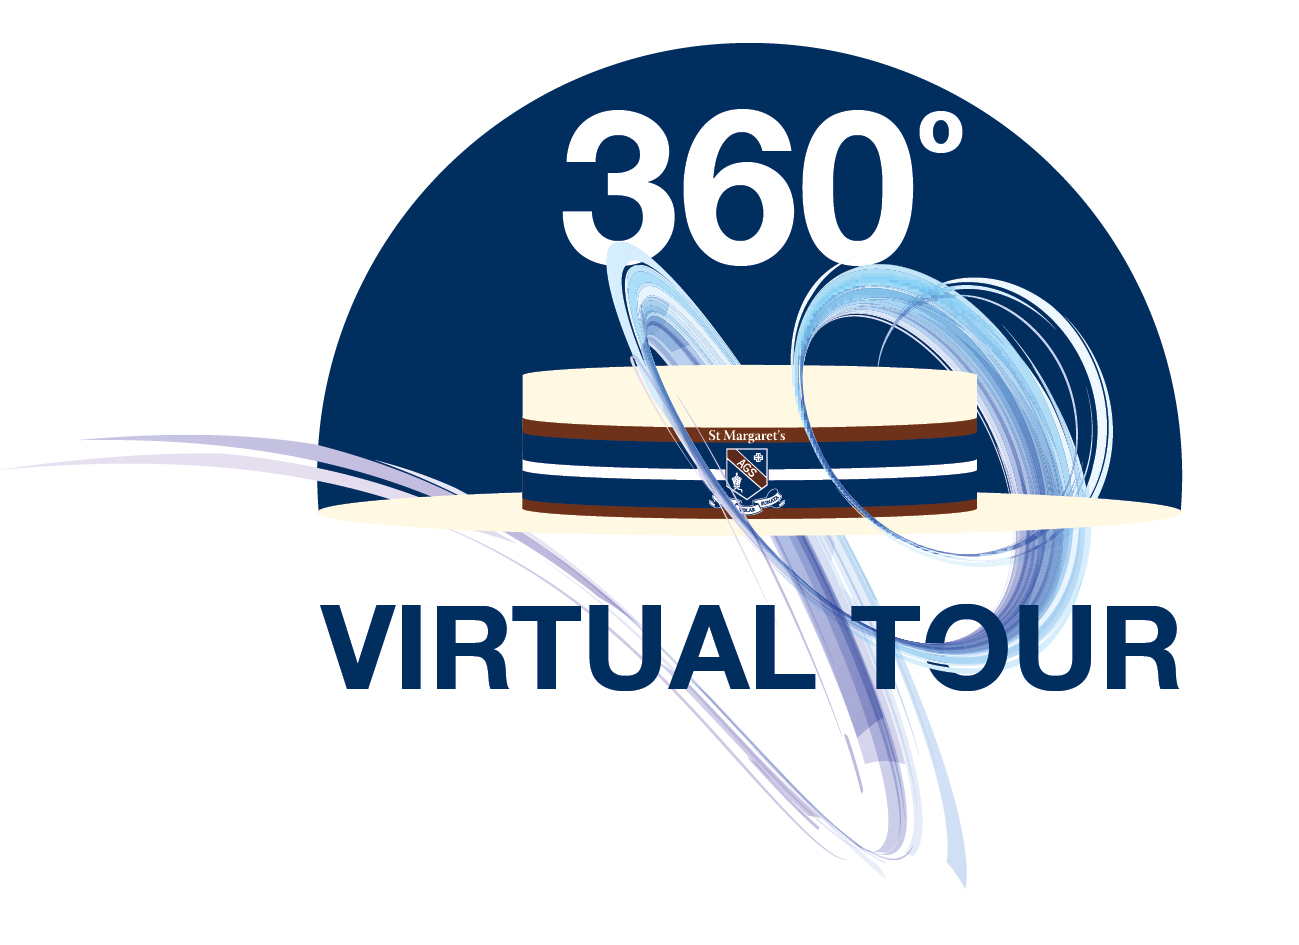 360 virtual tour logo